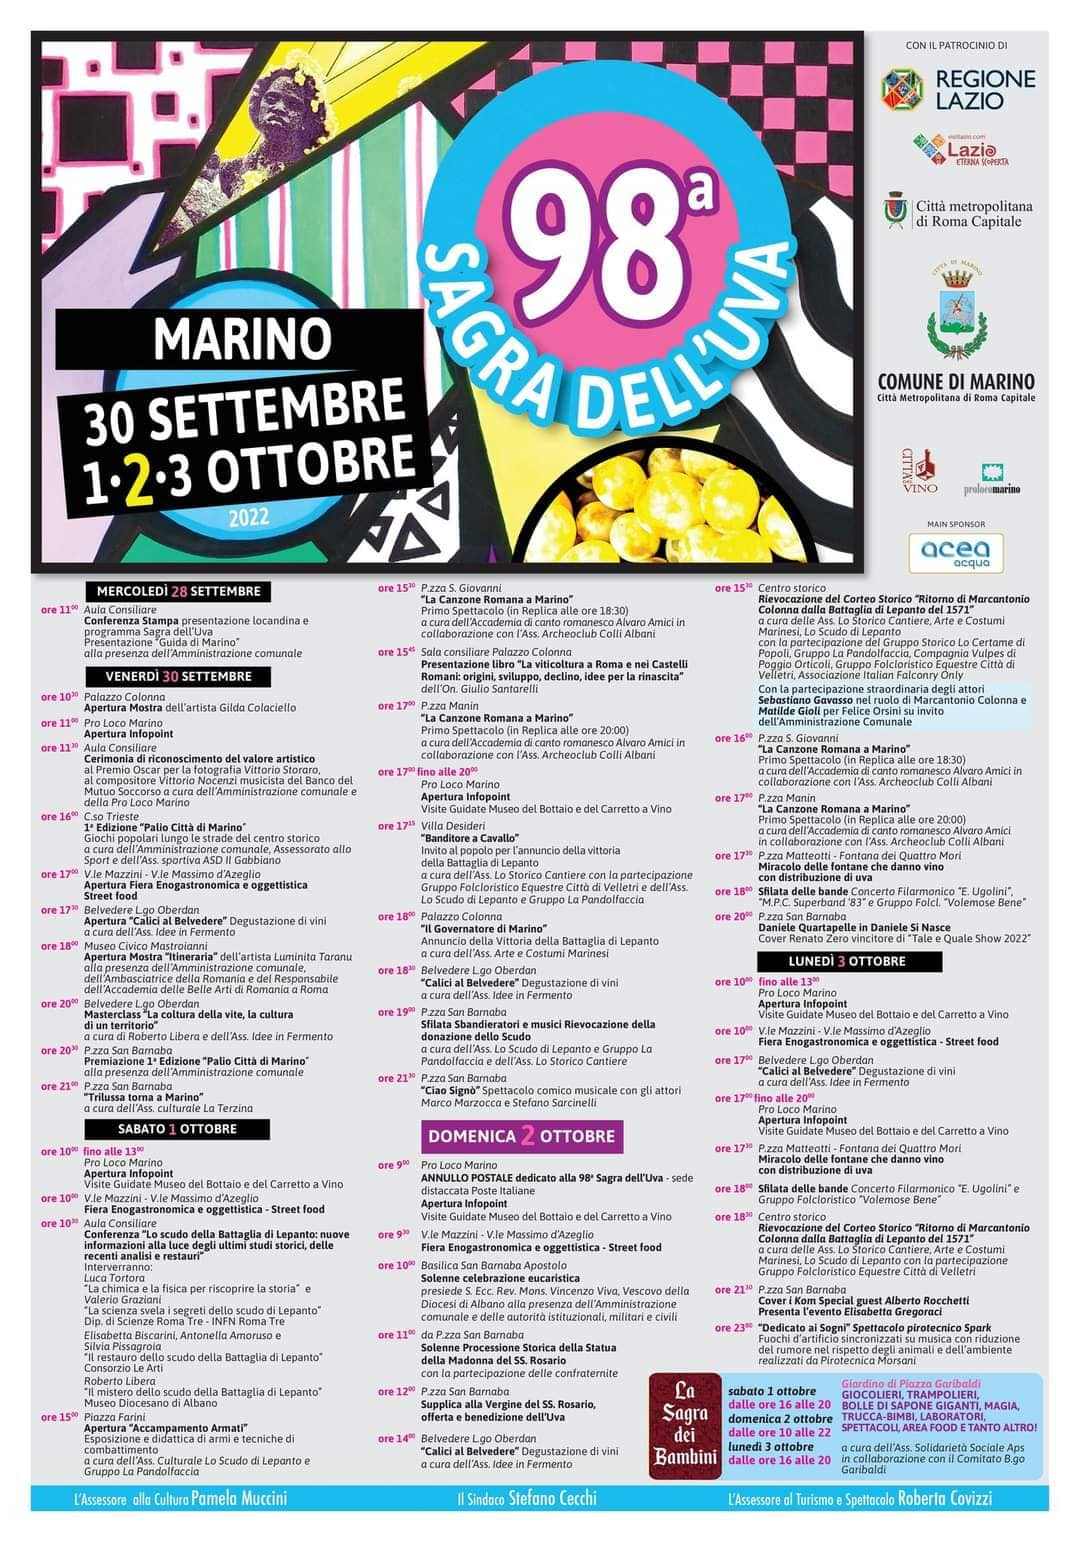 Marino (RM)
"98^ Sagra dell'Uva"
30 Settembre e 1-2-3 Ottobre 2022